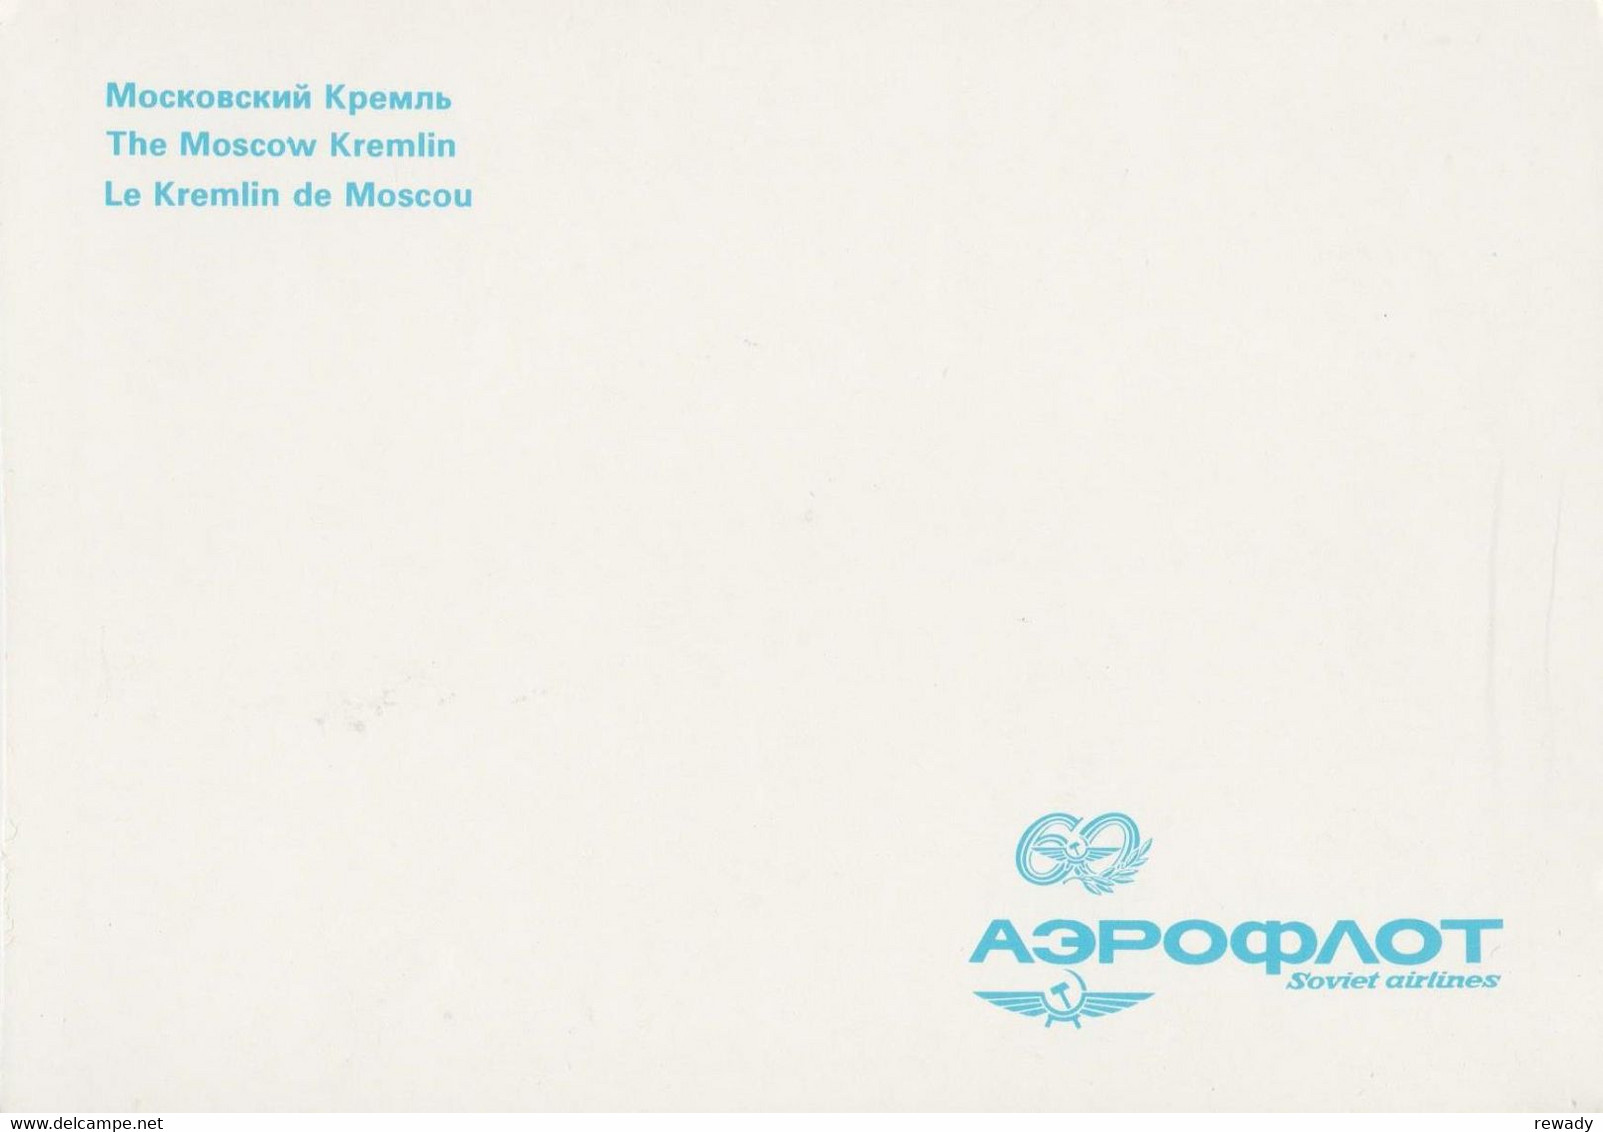 AEROFLOT / Soviet Airlines - Advertising lot / original cover / leaflet / envelope / sticker / postcards